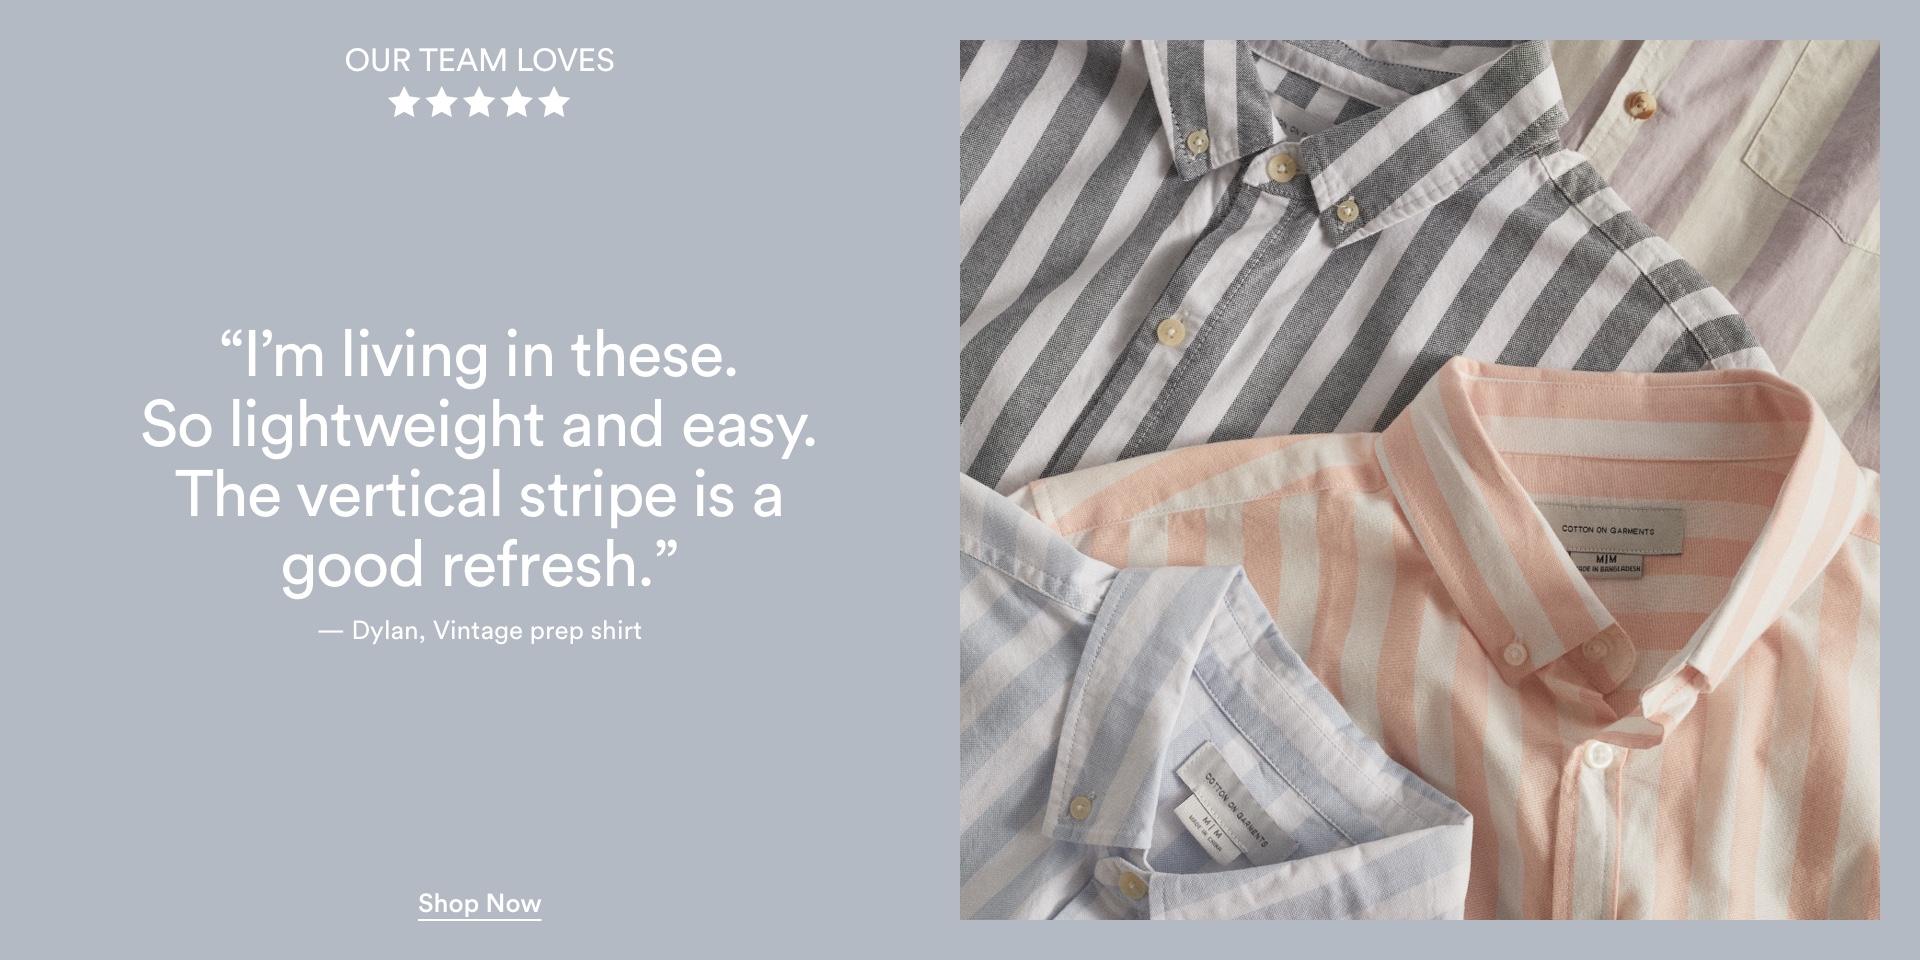 Our Team Loves: vintage prep shirt. Click to Shop.